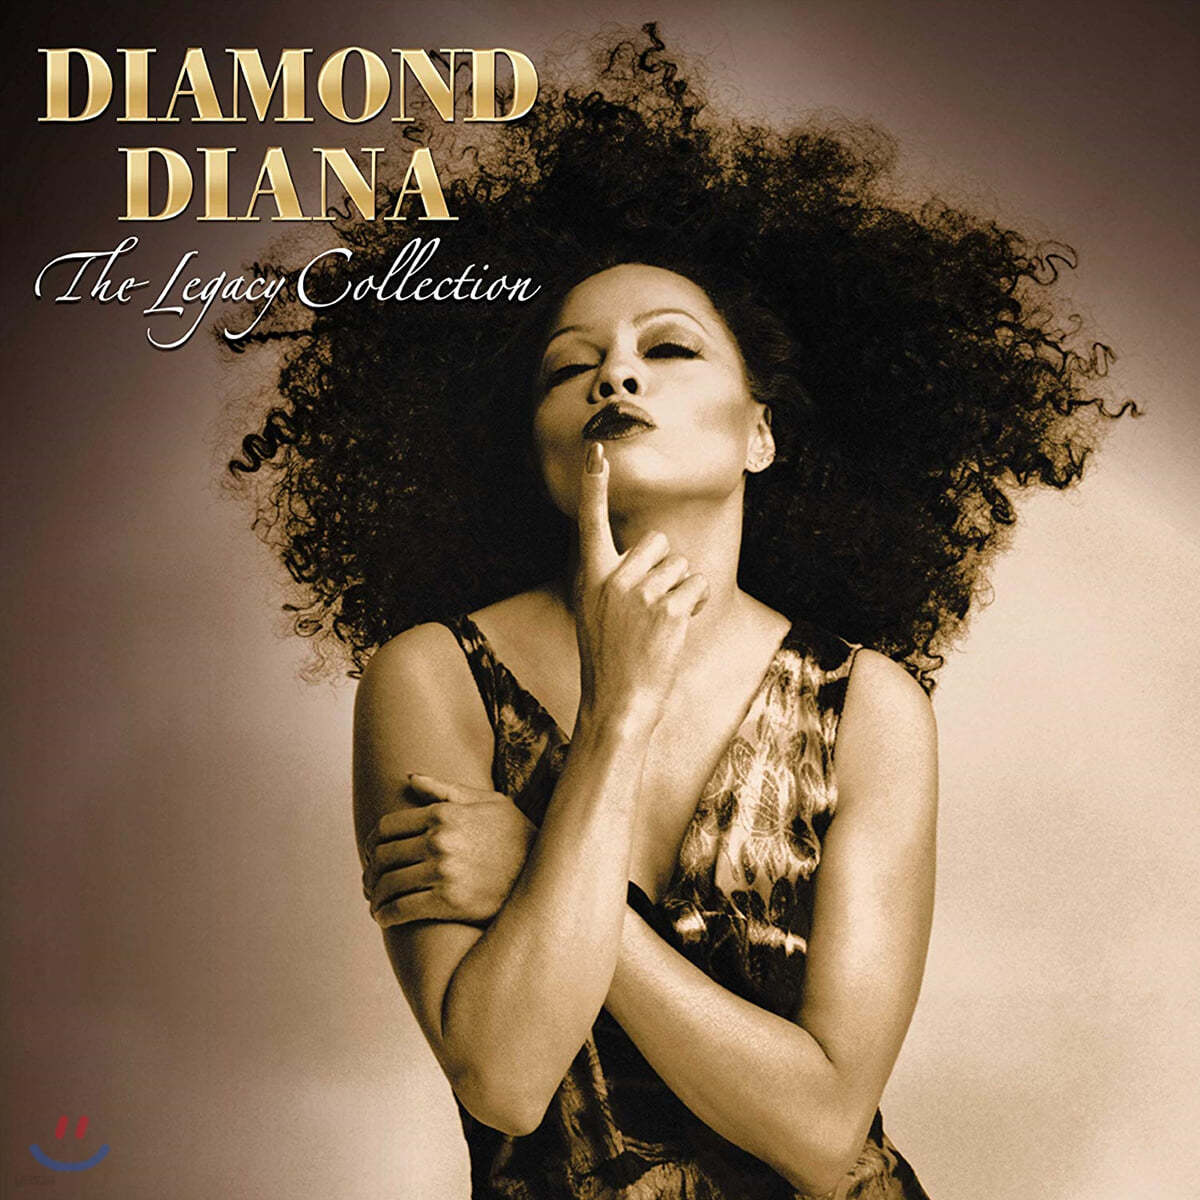 Diana Ross (다이애나 로스) - Diamond Diana: The Legacy Collection - 예스24